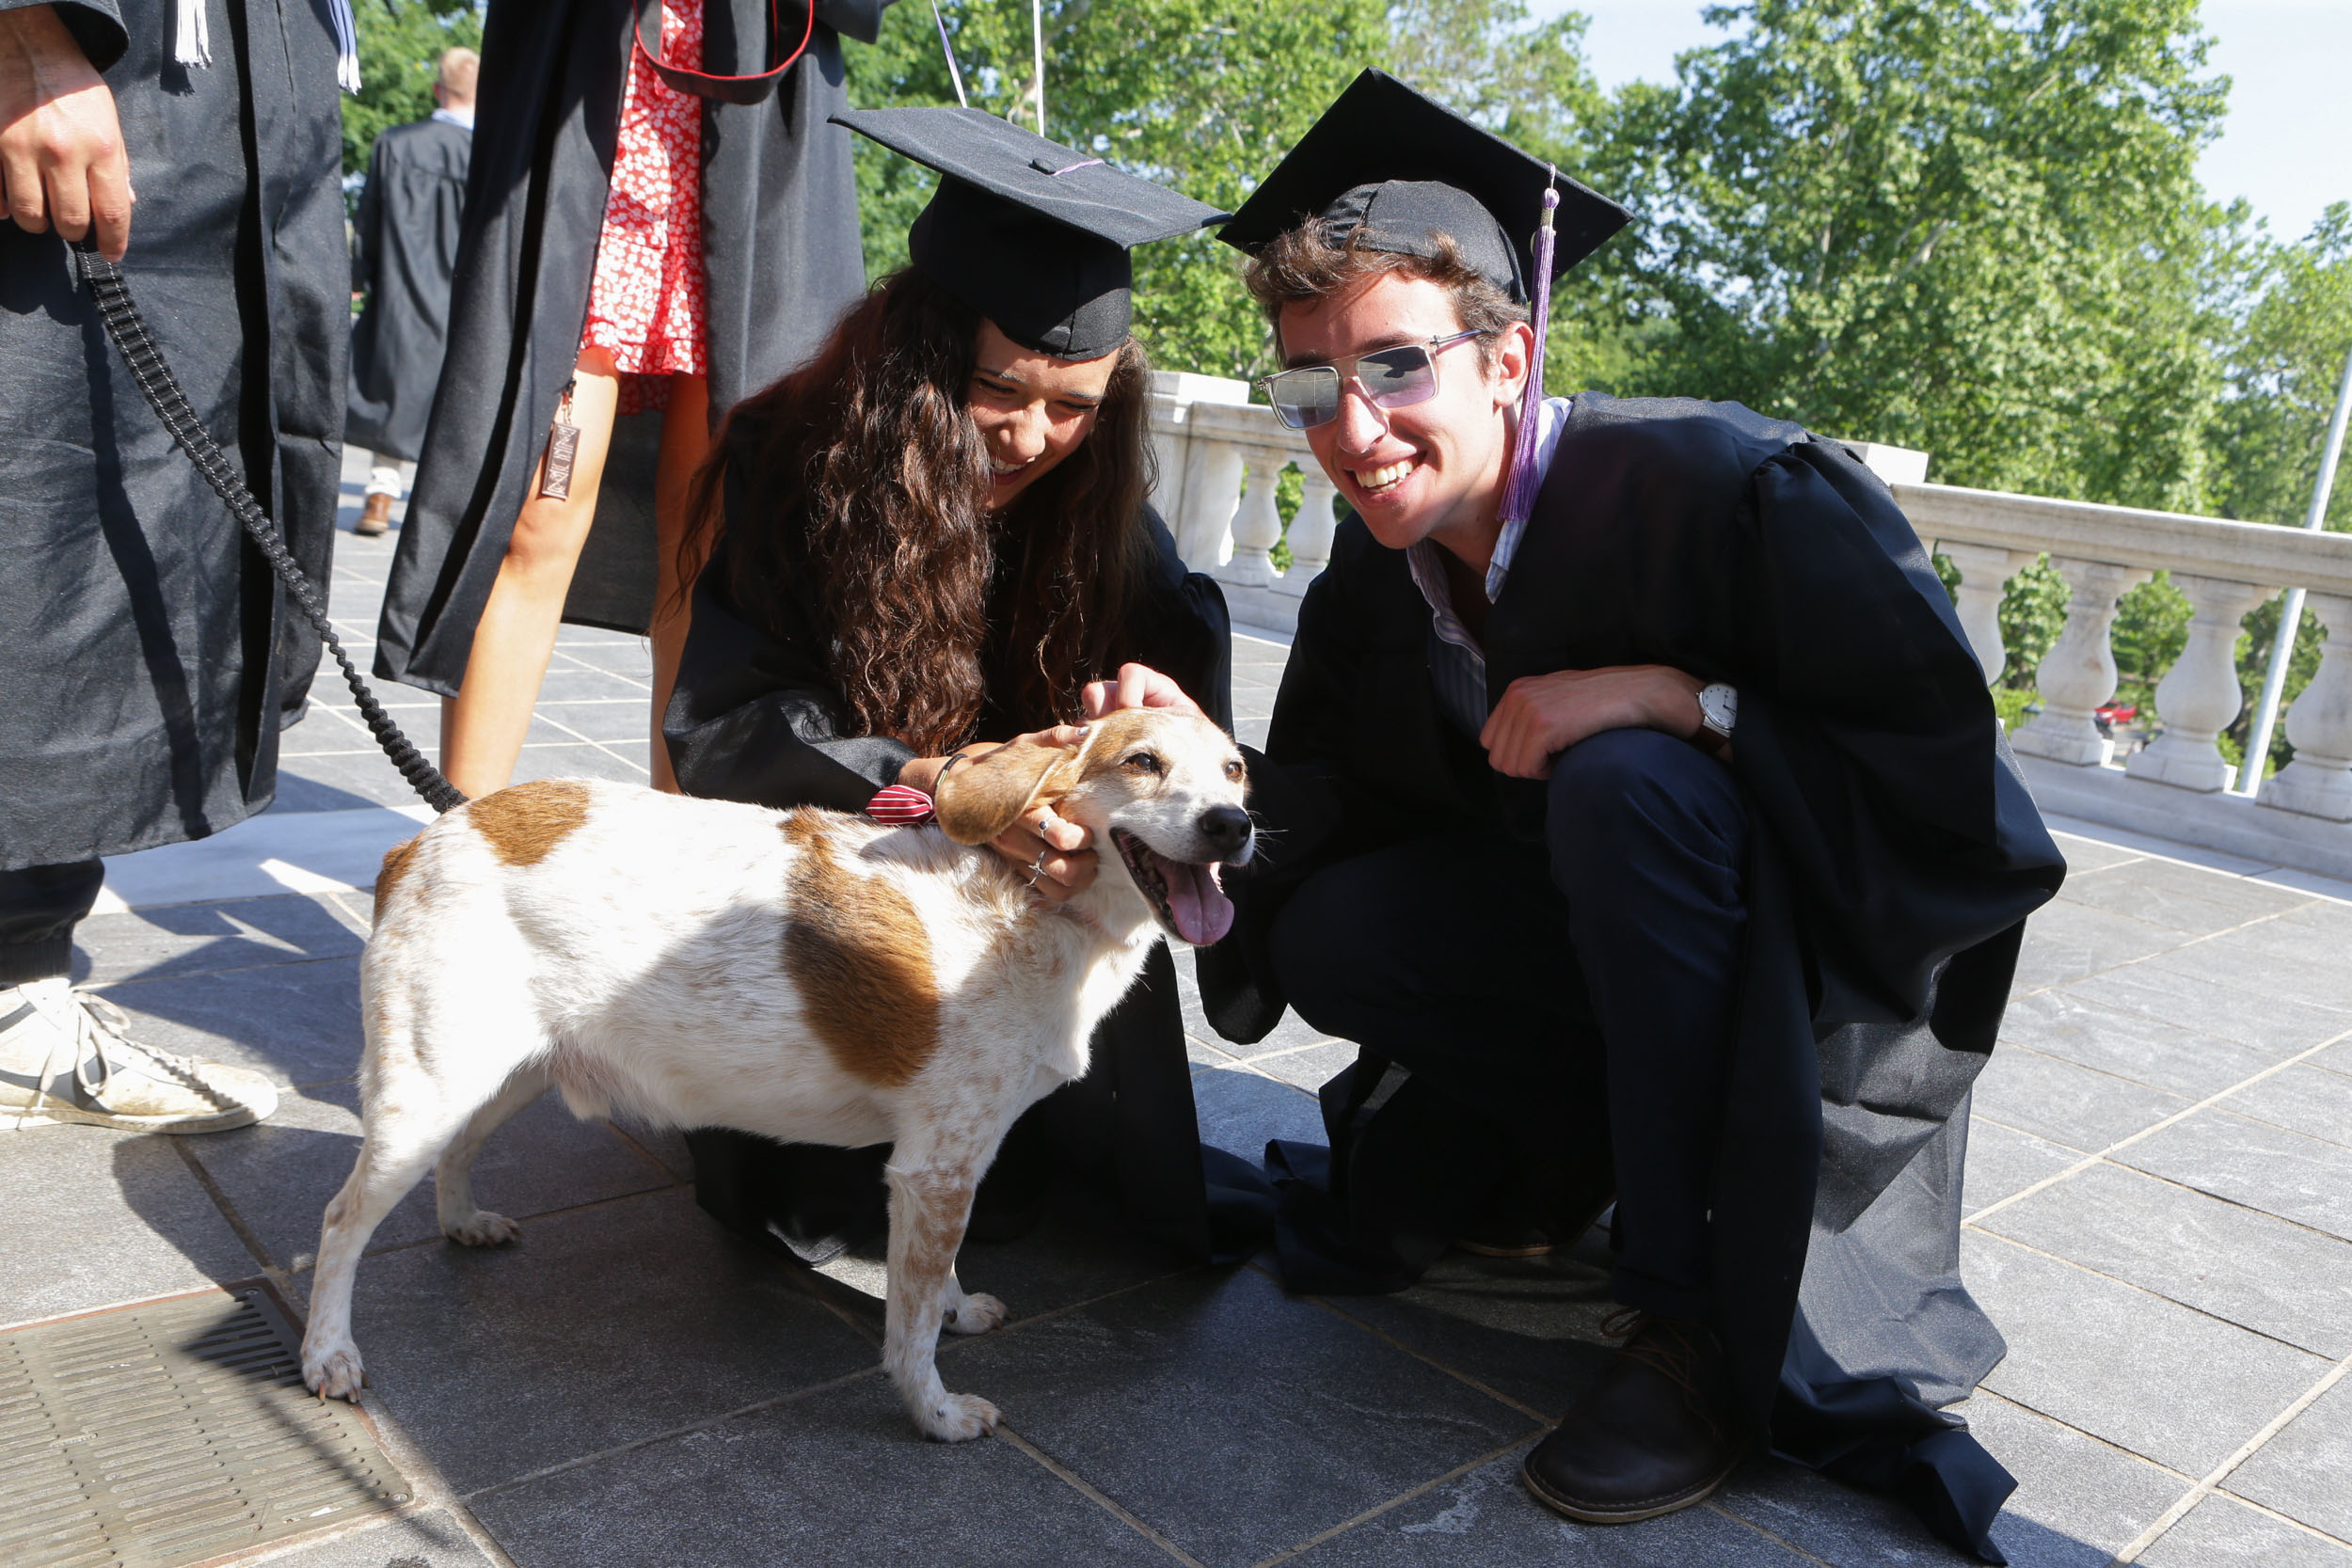 Graduates rub a dog